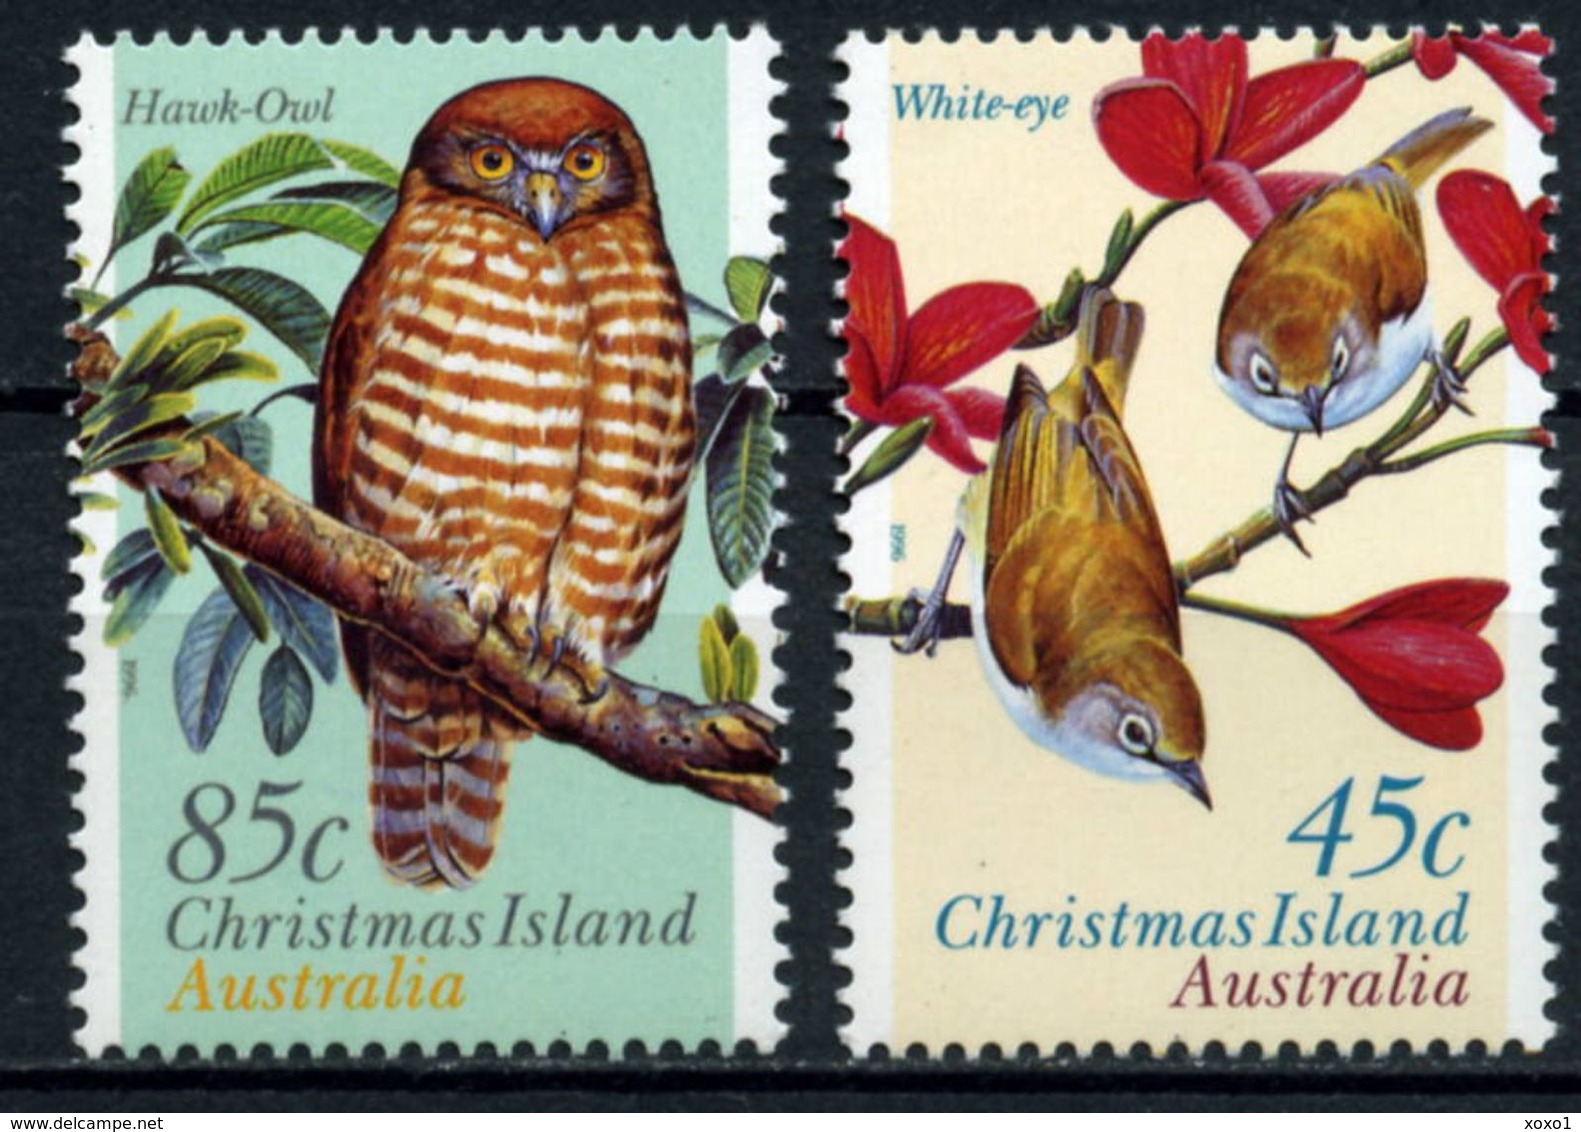 Christmas Island 1996 MiNr. 421 - 422  Weihnachtsinsel Birds Vögel 2v  MNH** 3,00 € - Christmas Island